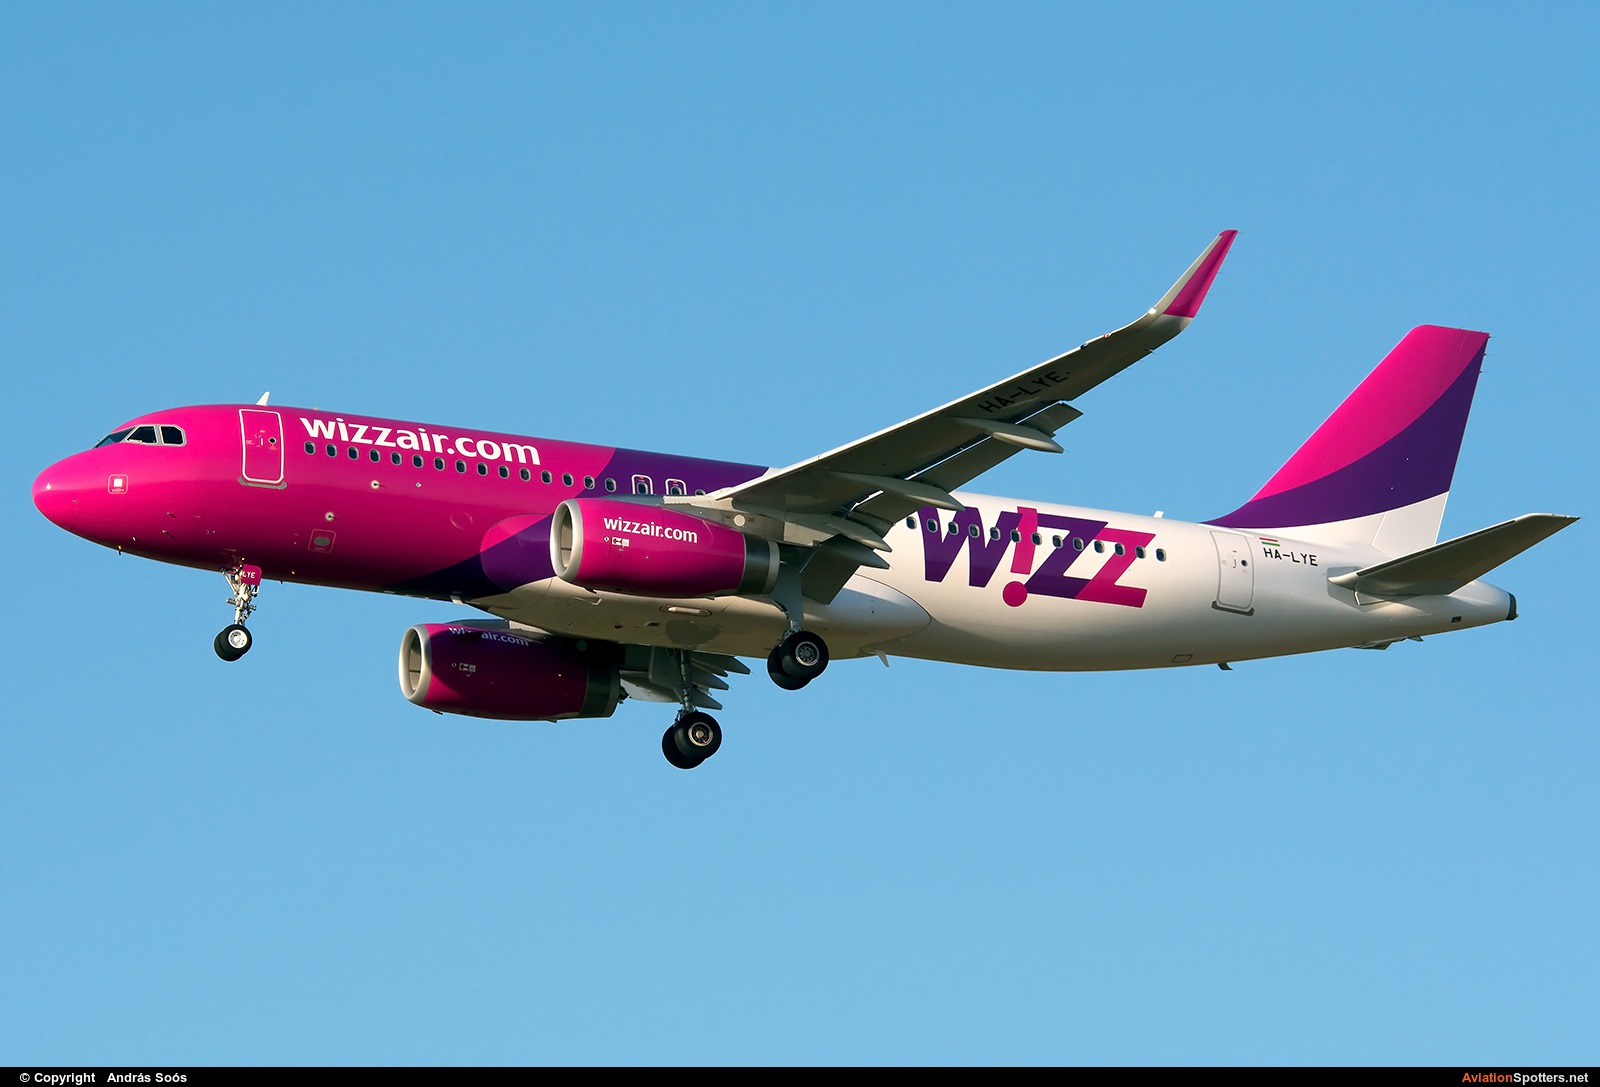 Wizz Air  -  A320  (HA-LYE) By András Soós (sas1965)